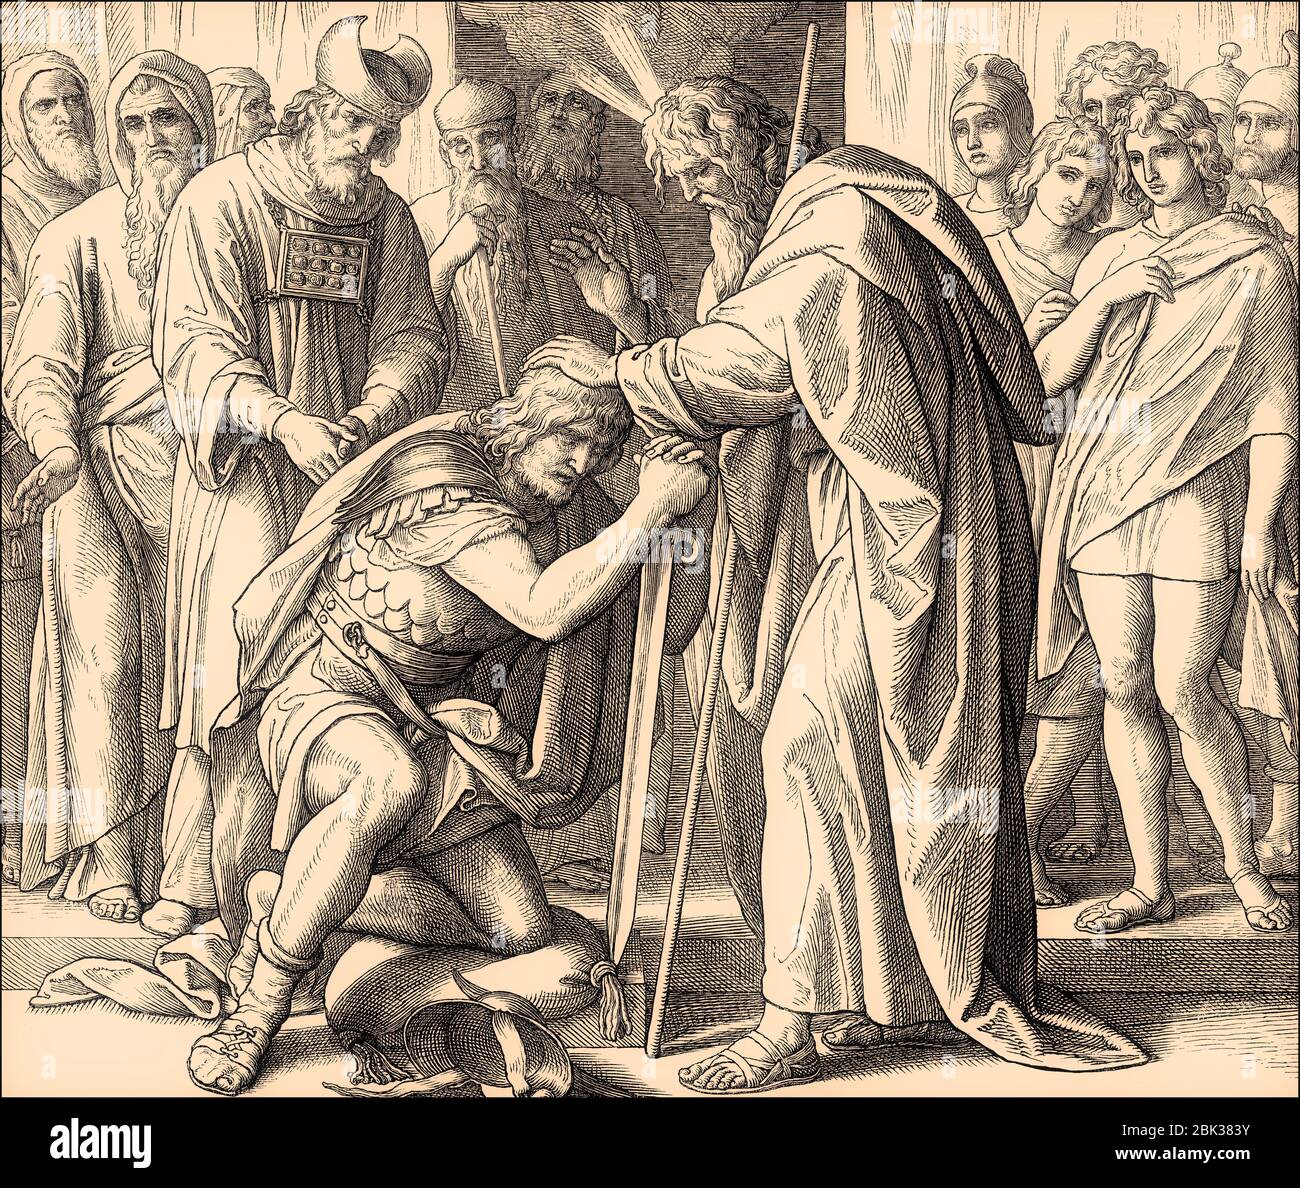 The Selection of Joshua, Old Testament, by Julius Schnorr von Carolsfeld, 1860 Stock Photo